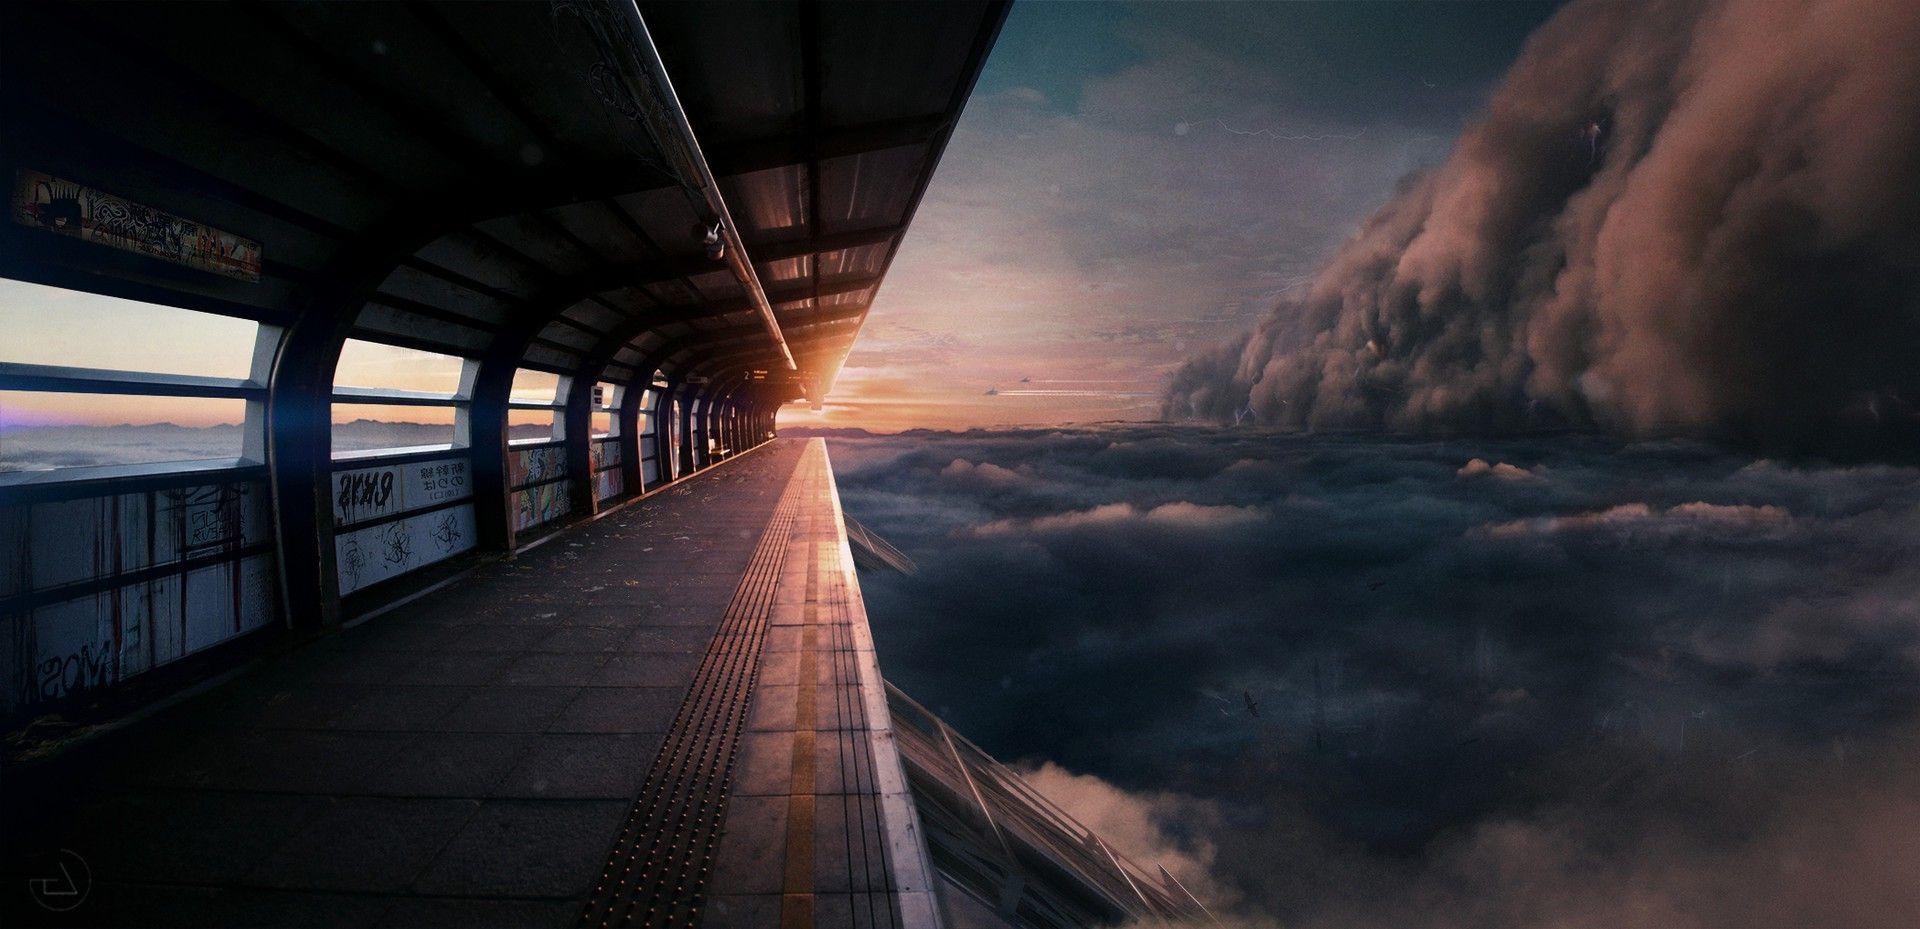 skyline, Futuristic, Clouds, Train Station, Star Wars